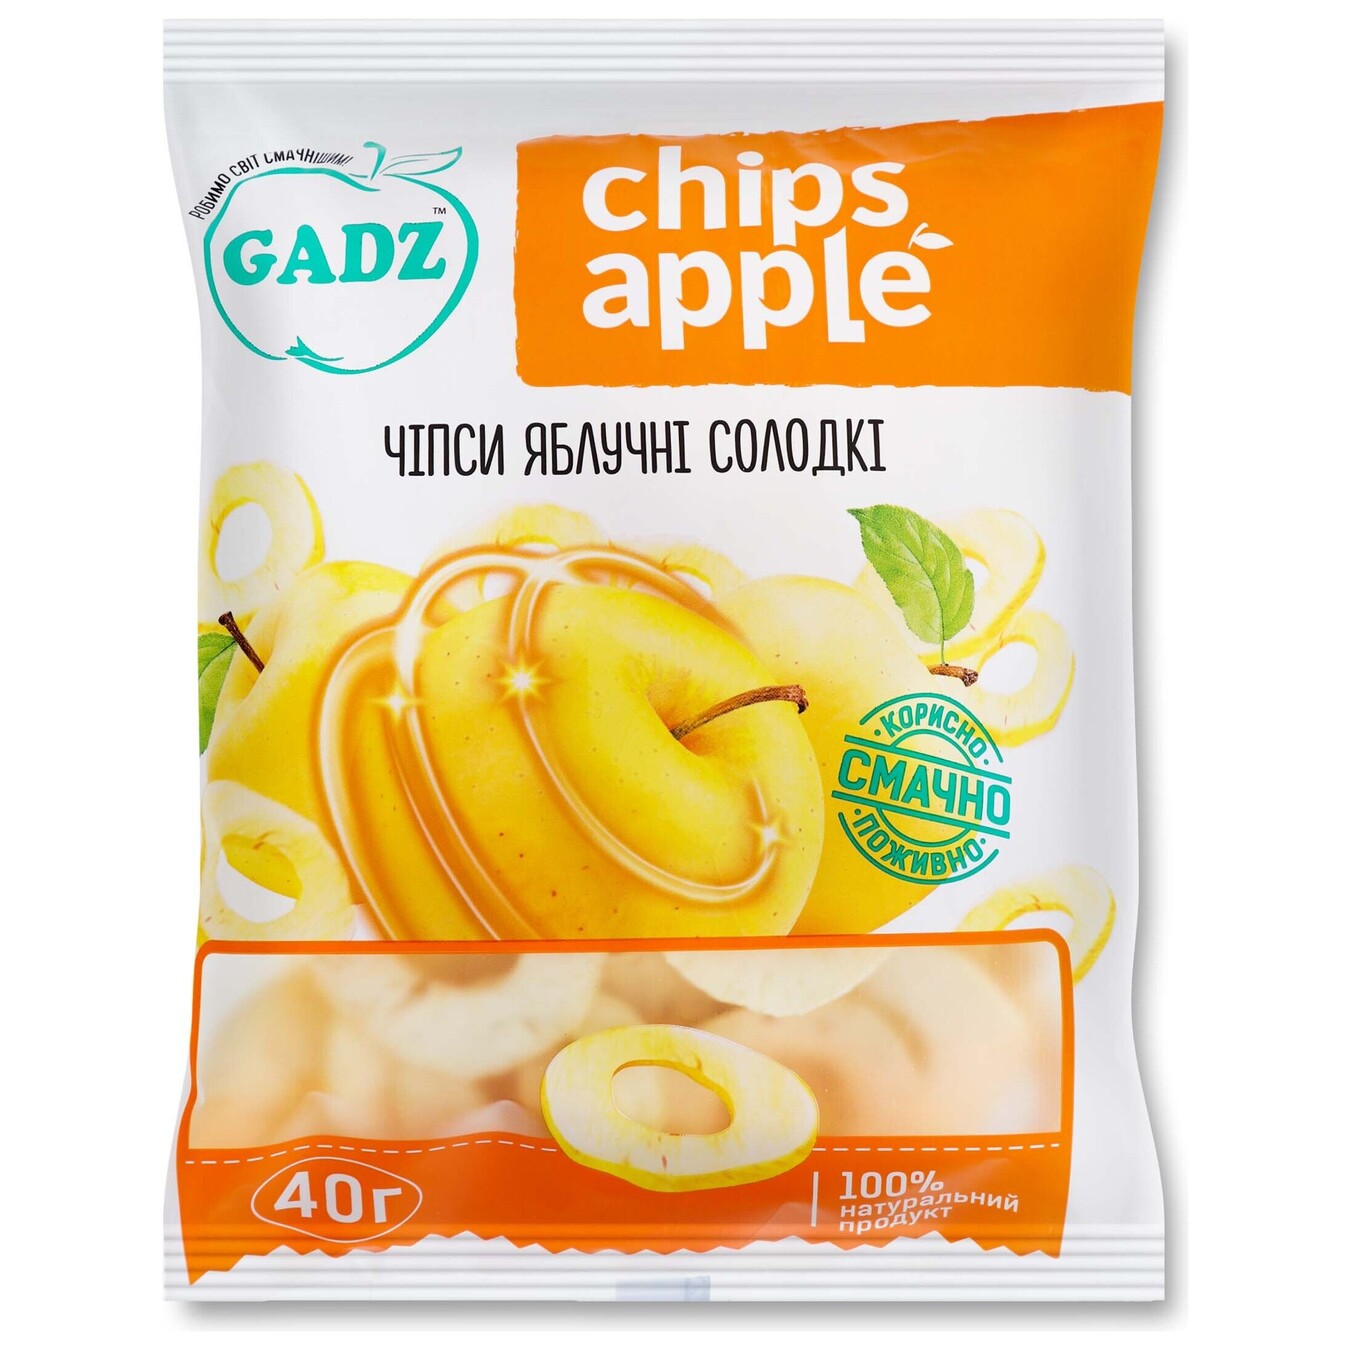 GADZ sweet apple chips 40g